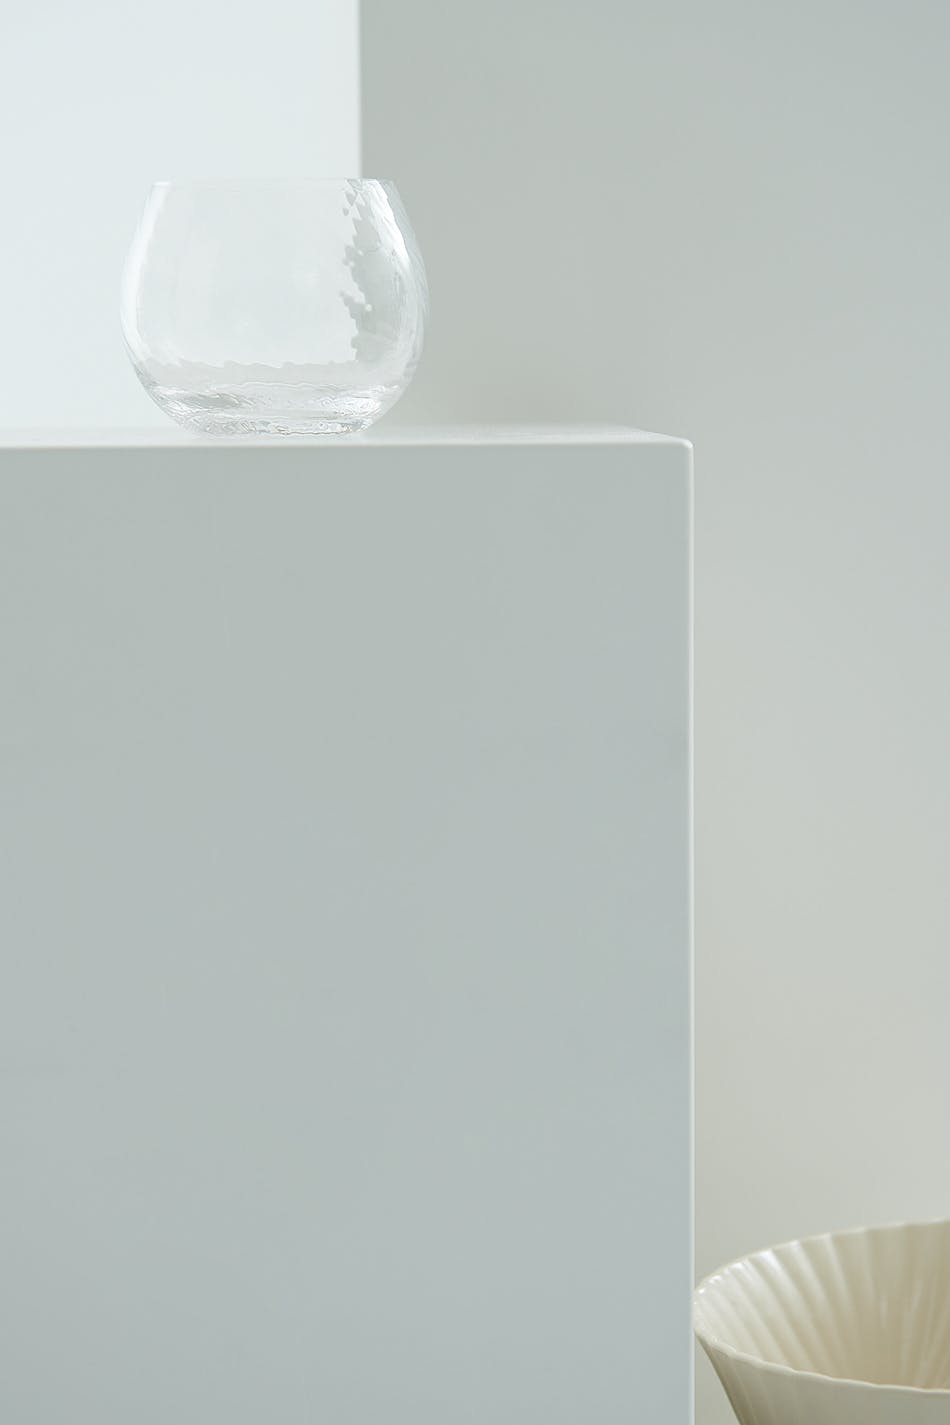 ByOn Opacity Water glass